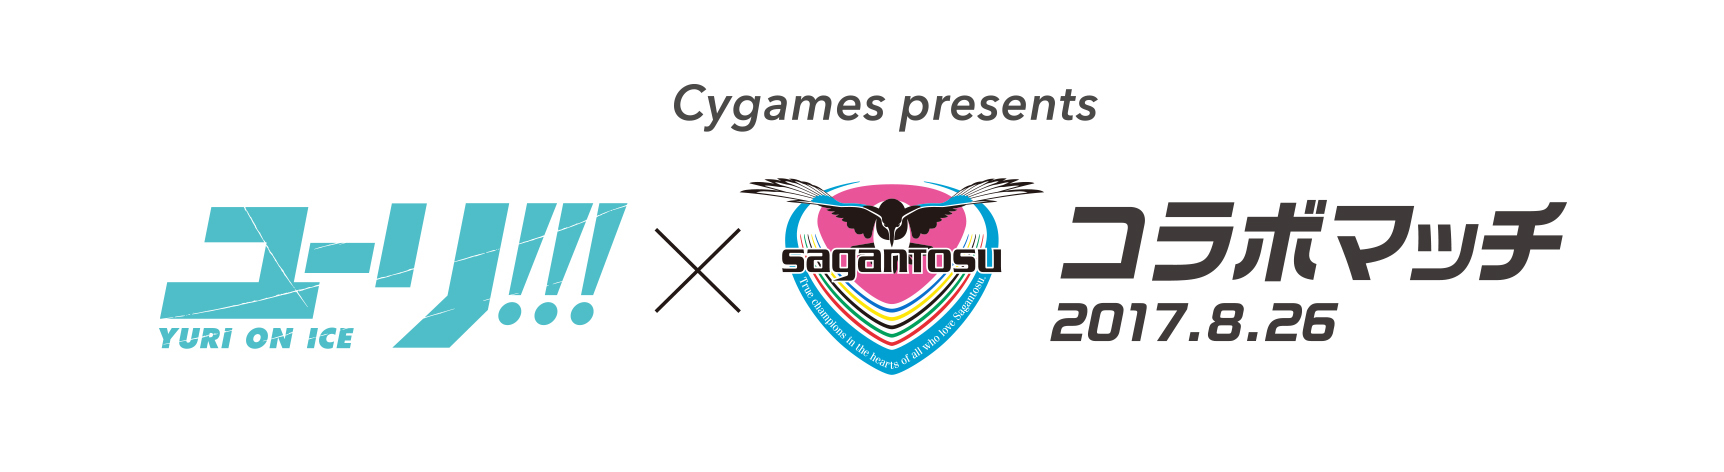 Cygames presents 「ユーリ!!! on ICE × サガン鳥栖」コラボマッチ